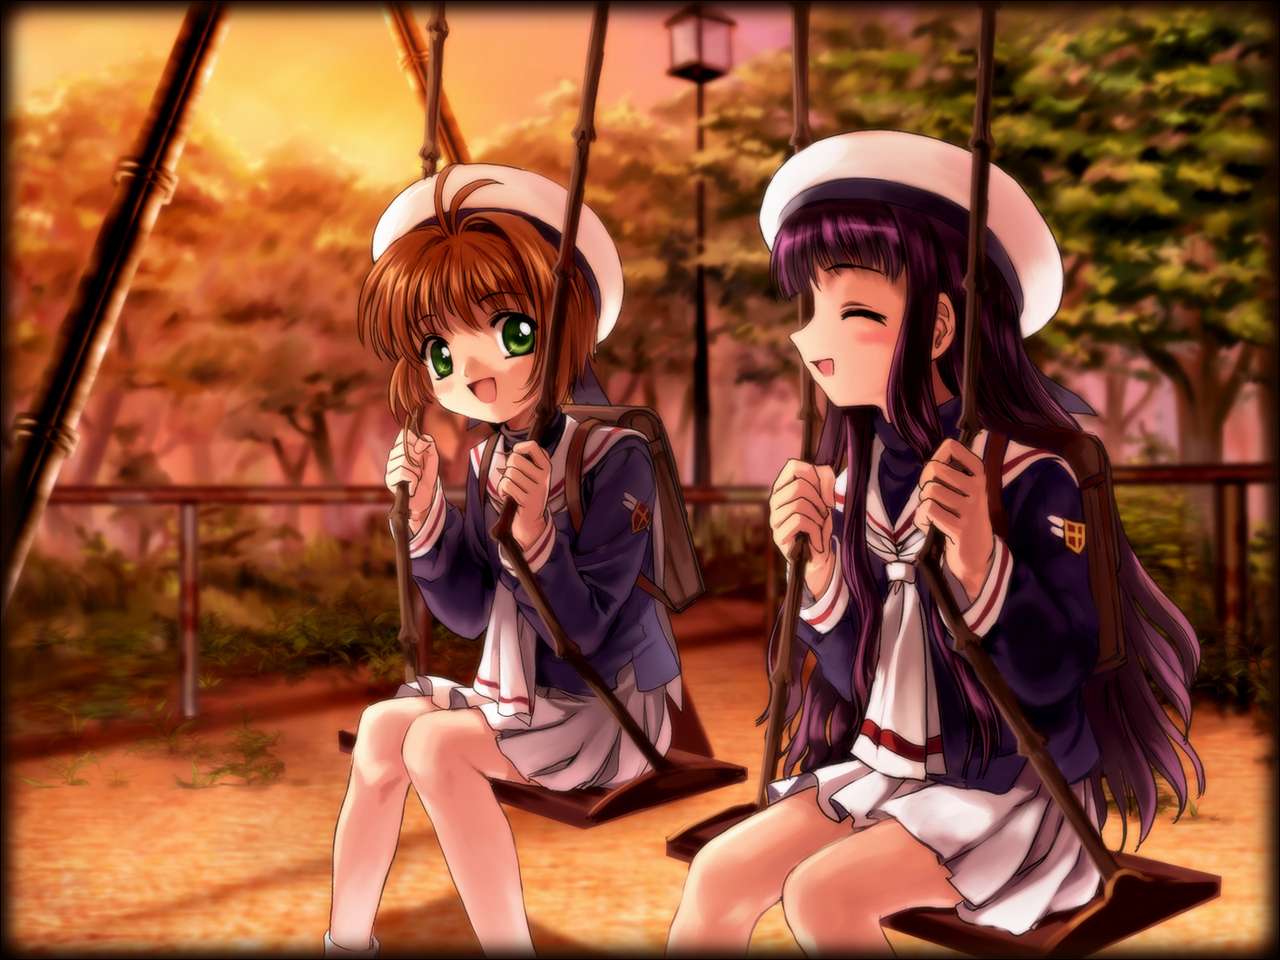 Sakura e Tomoyo. puzzle online a partir de fotografia